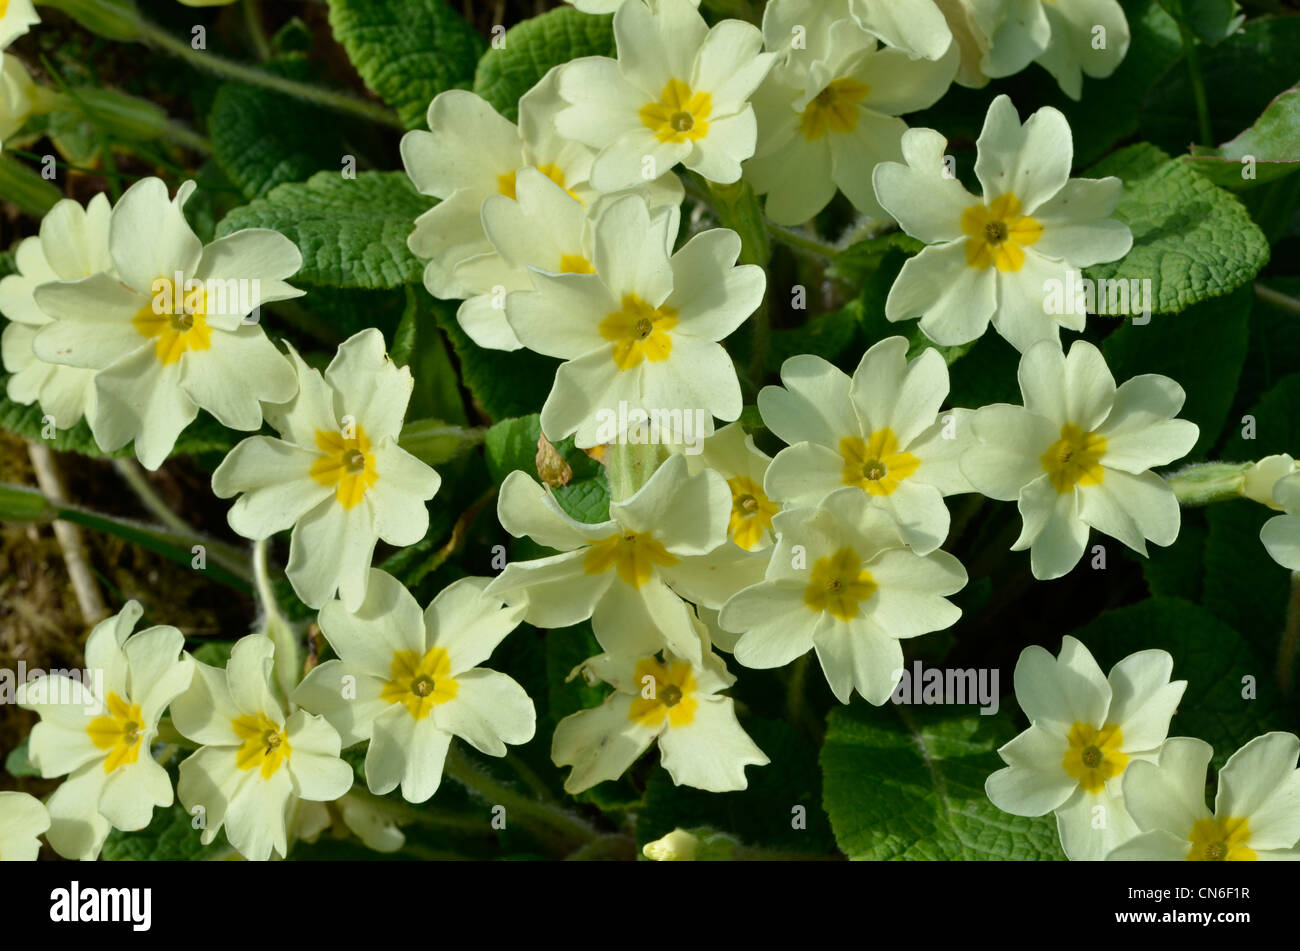 Close-up image of the sulphur yellow flowers of the early springtime flower 'primrose' / Primula vulgaris. Wild primroses, primroses in the wild. Stock Photo